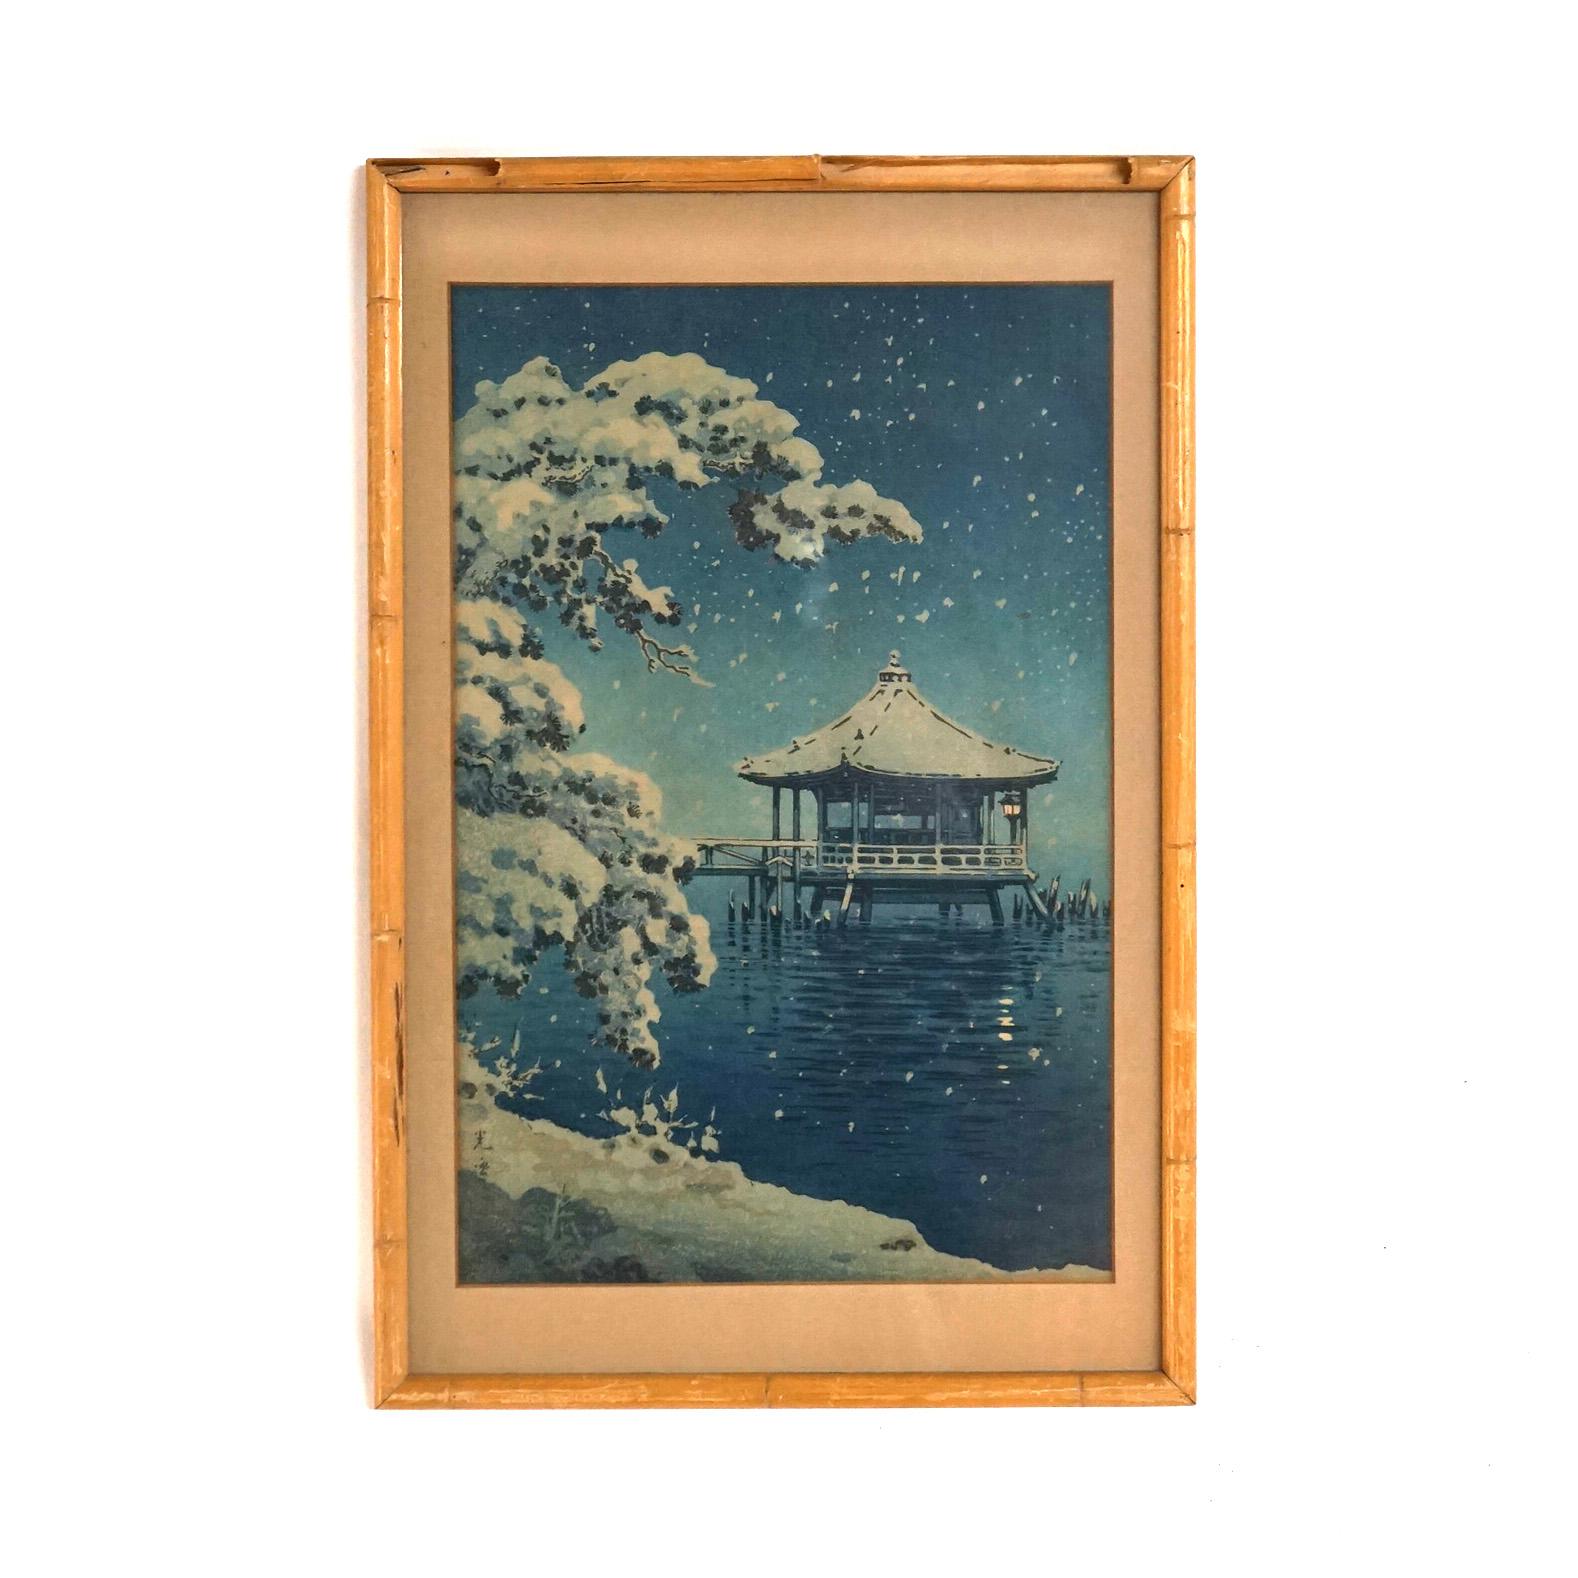 Drei antike japanische Holzschnitte im Holzschnitt - Genre, Mt Fugi & Landschaft, um 1920

Maße - 17,75 